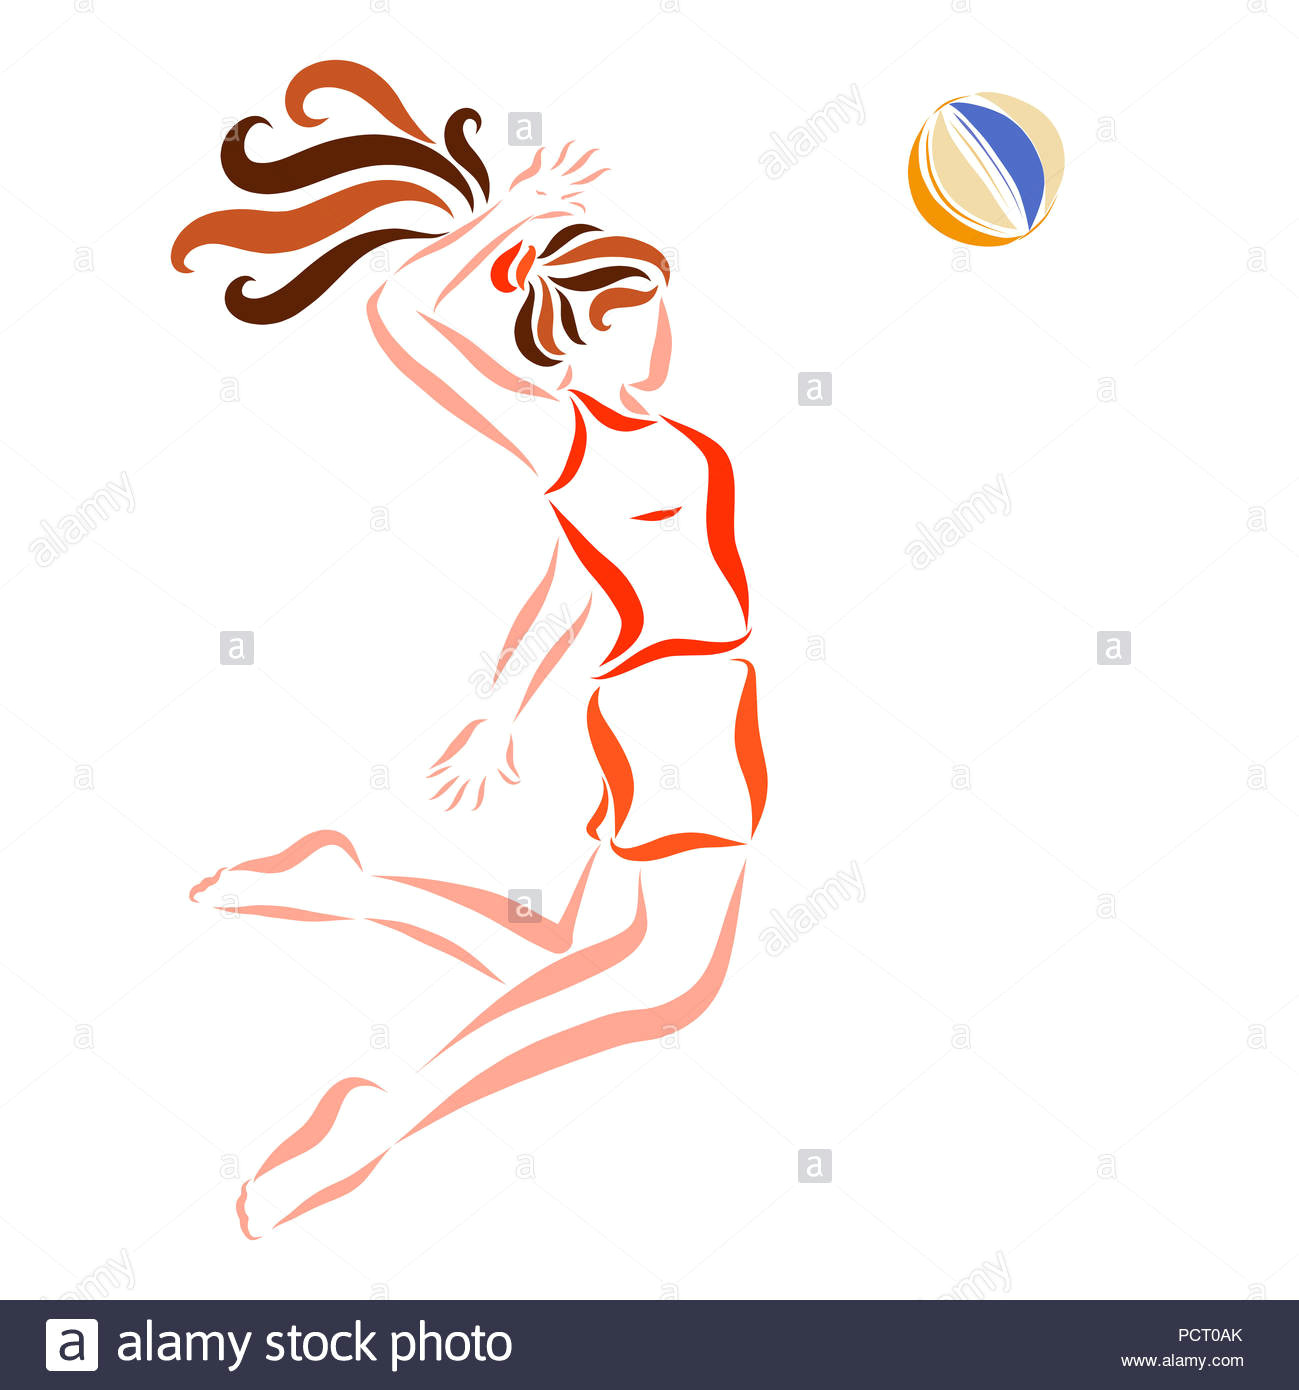 girl playing volleyball jump and kick stock image